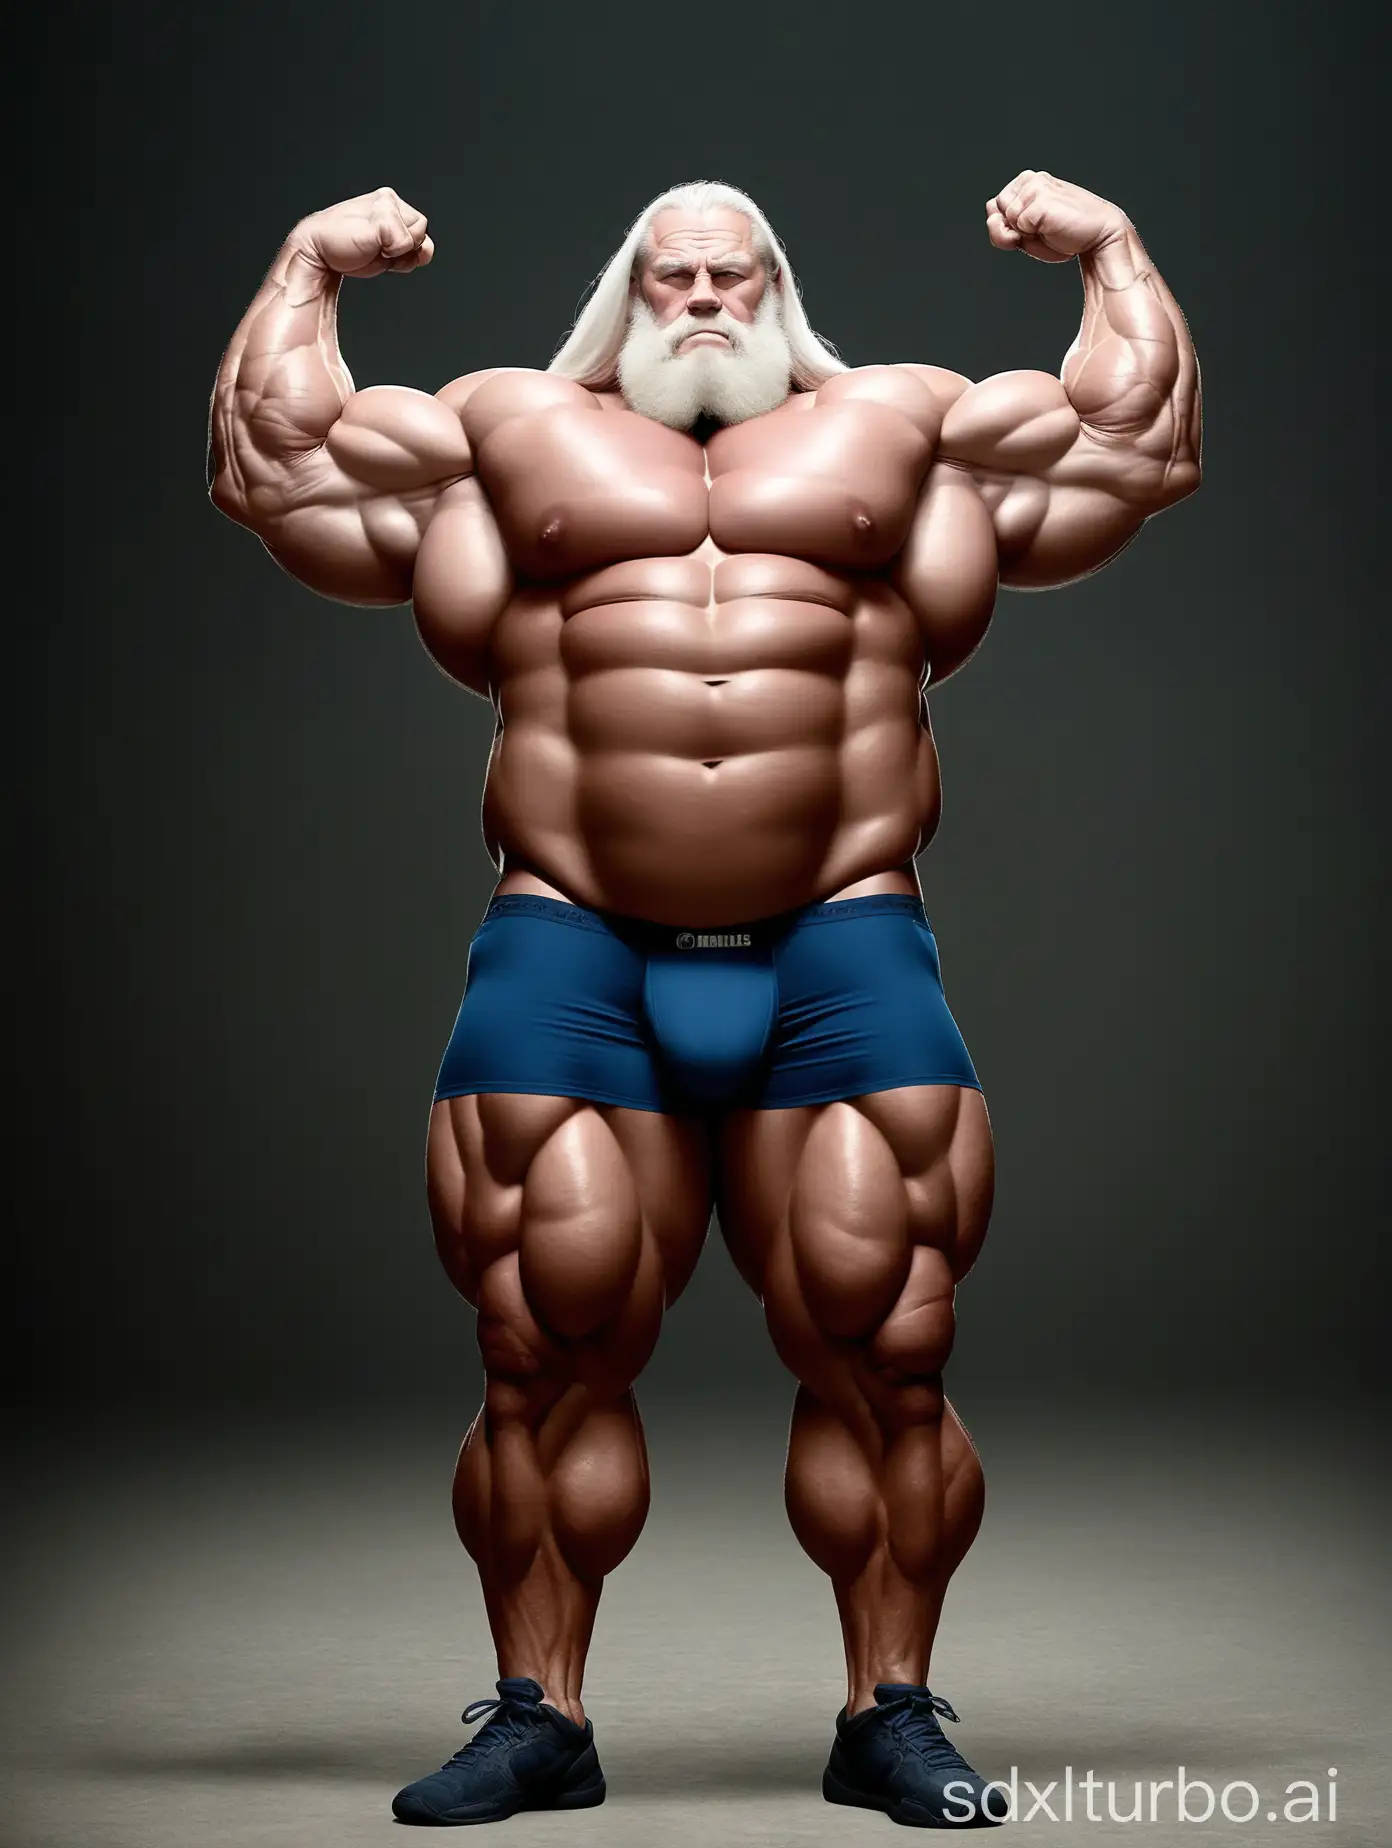 Massive-Muscle-Stud-Showing-Off-Huge-Biceps-in-Underwear